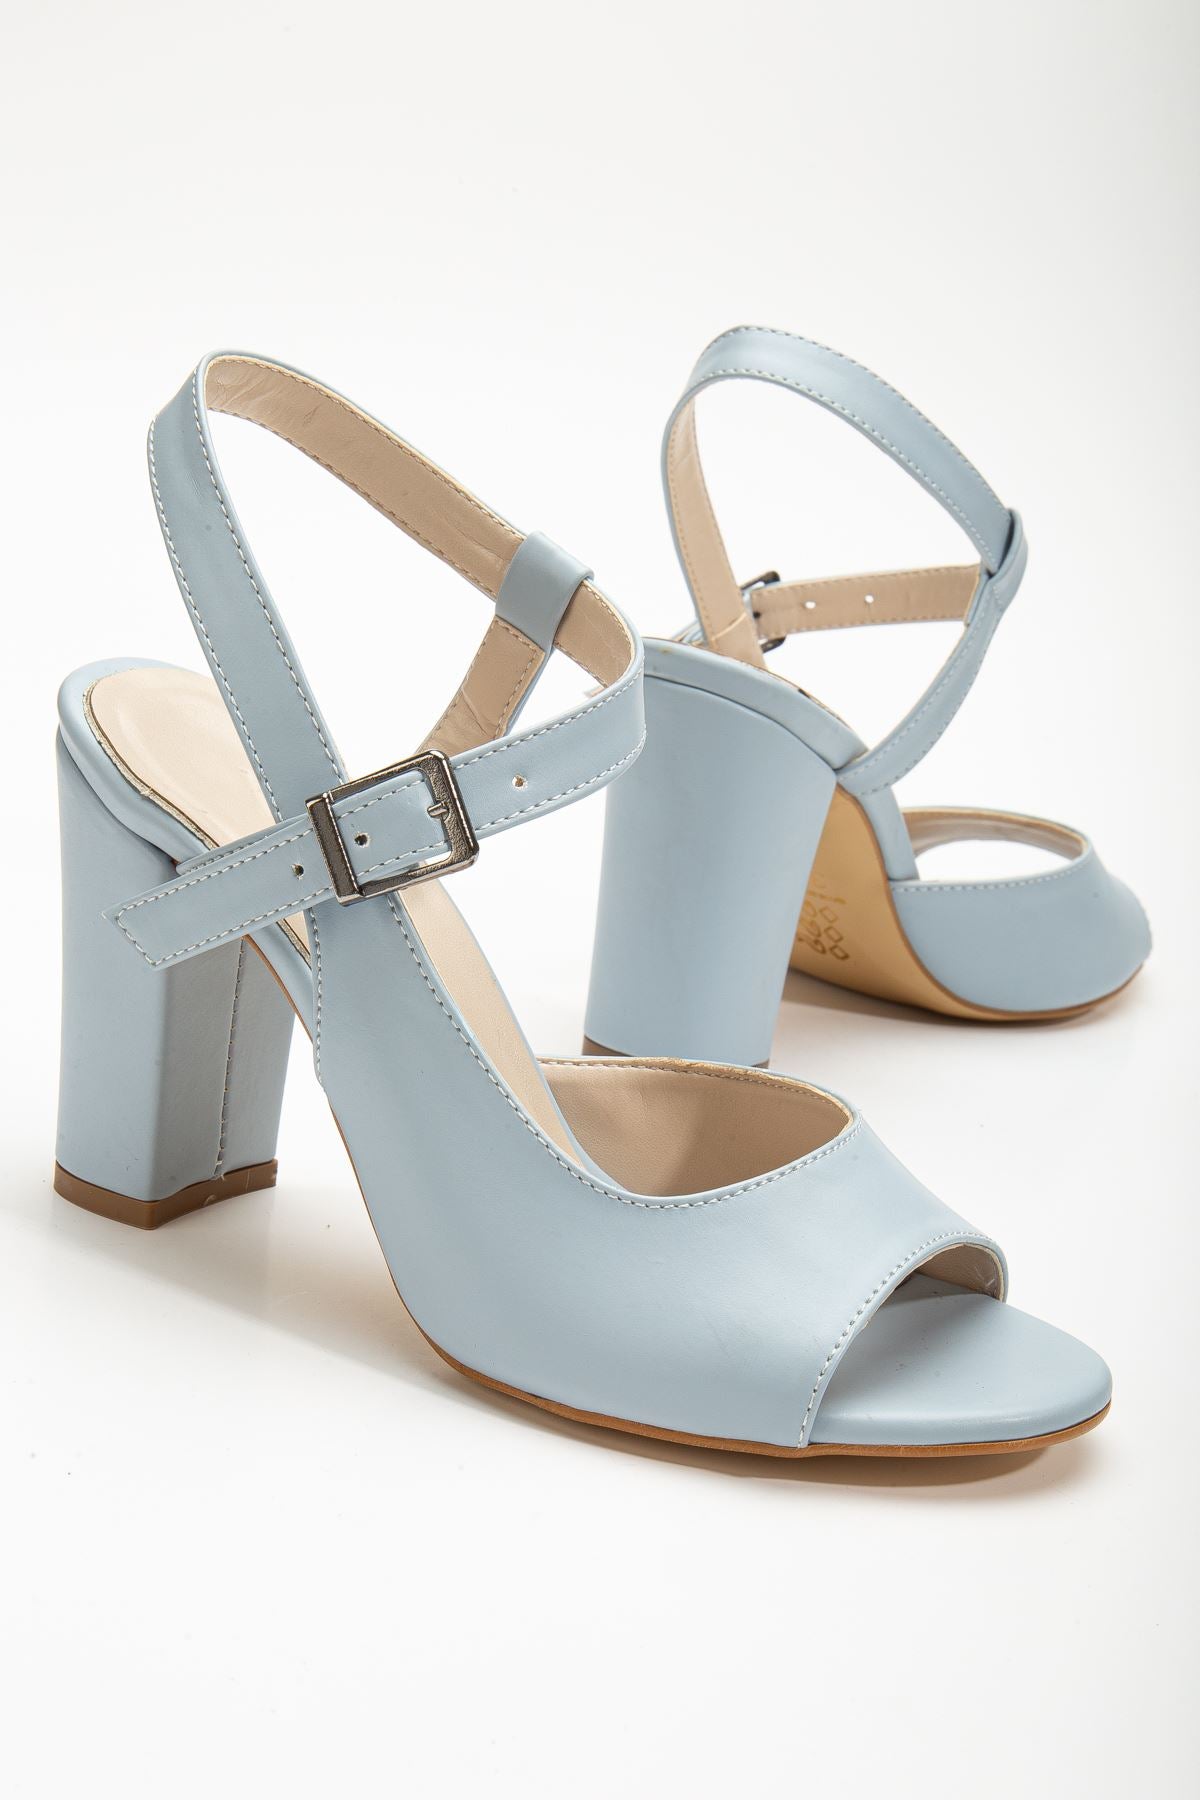 Lovisa Heeled Baby Blue Skin Women's Shoes - STREETMODE ™